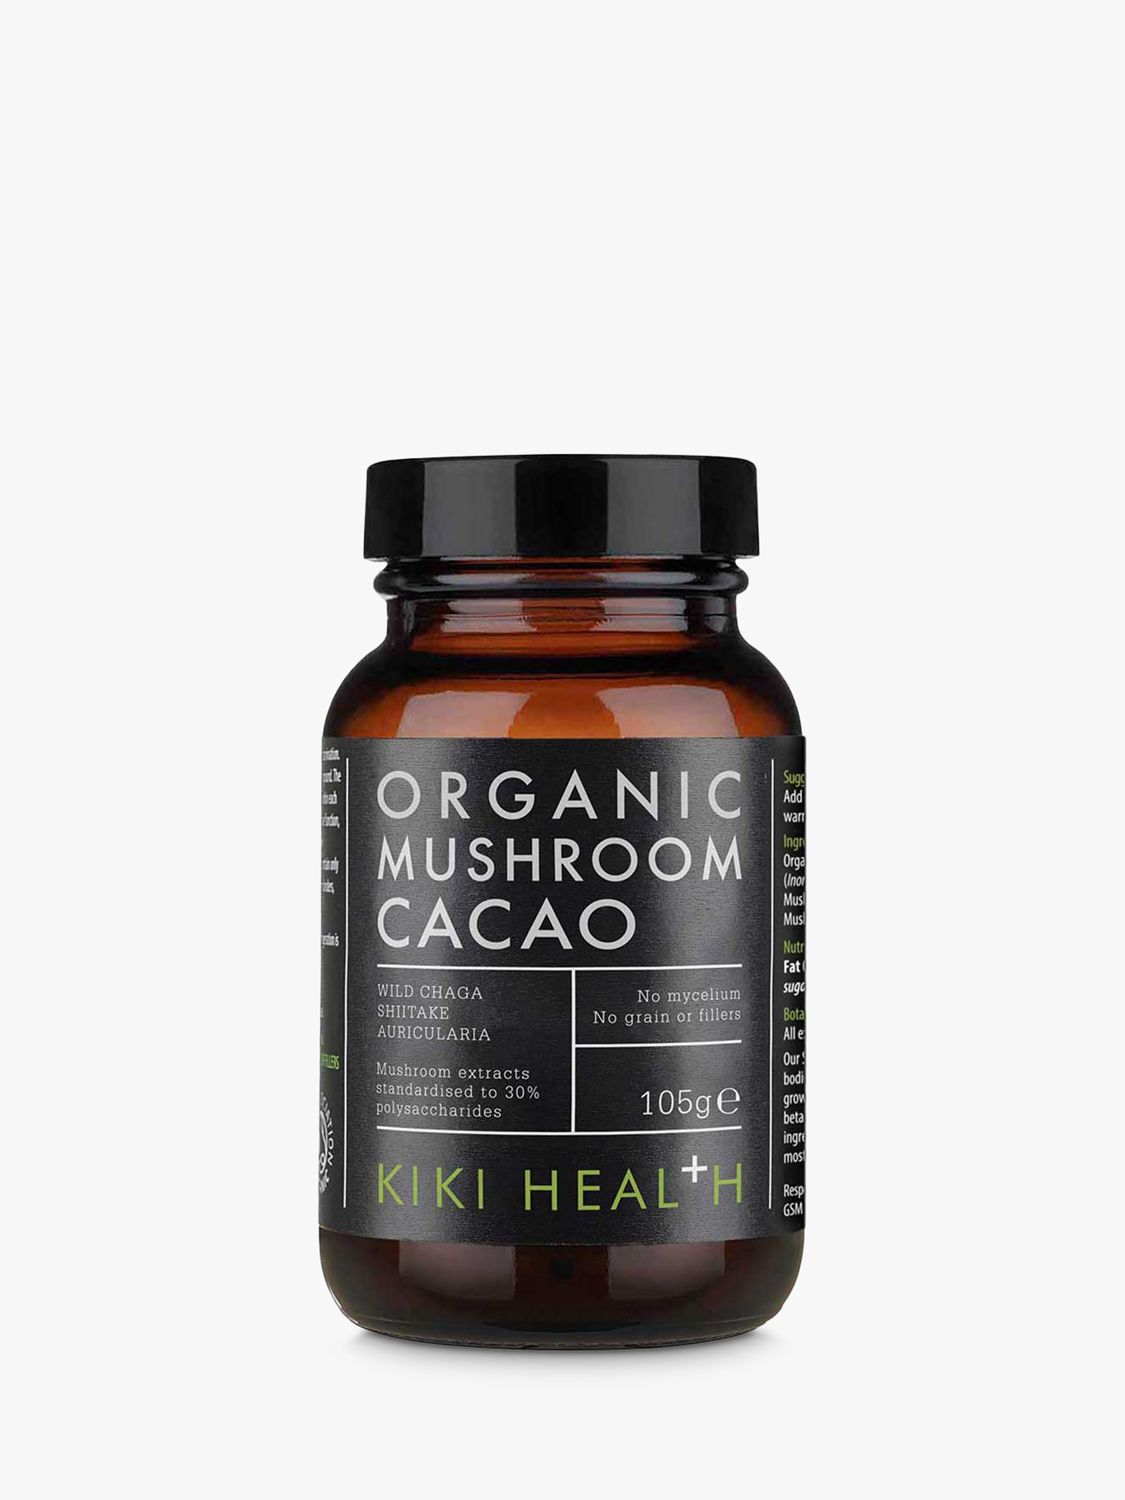 KIKI Health Organic Mushroom Extract Cacao Powder, 105g 1